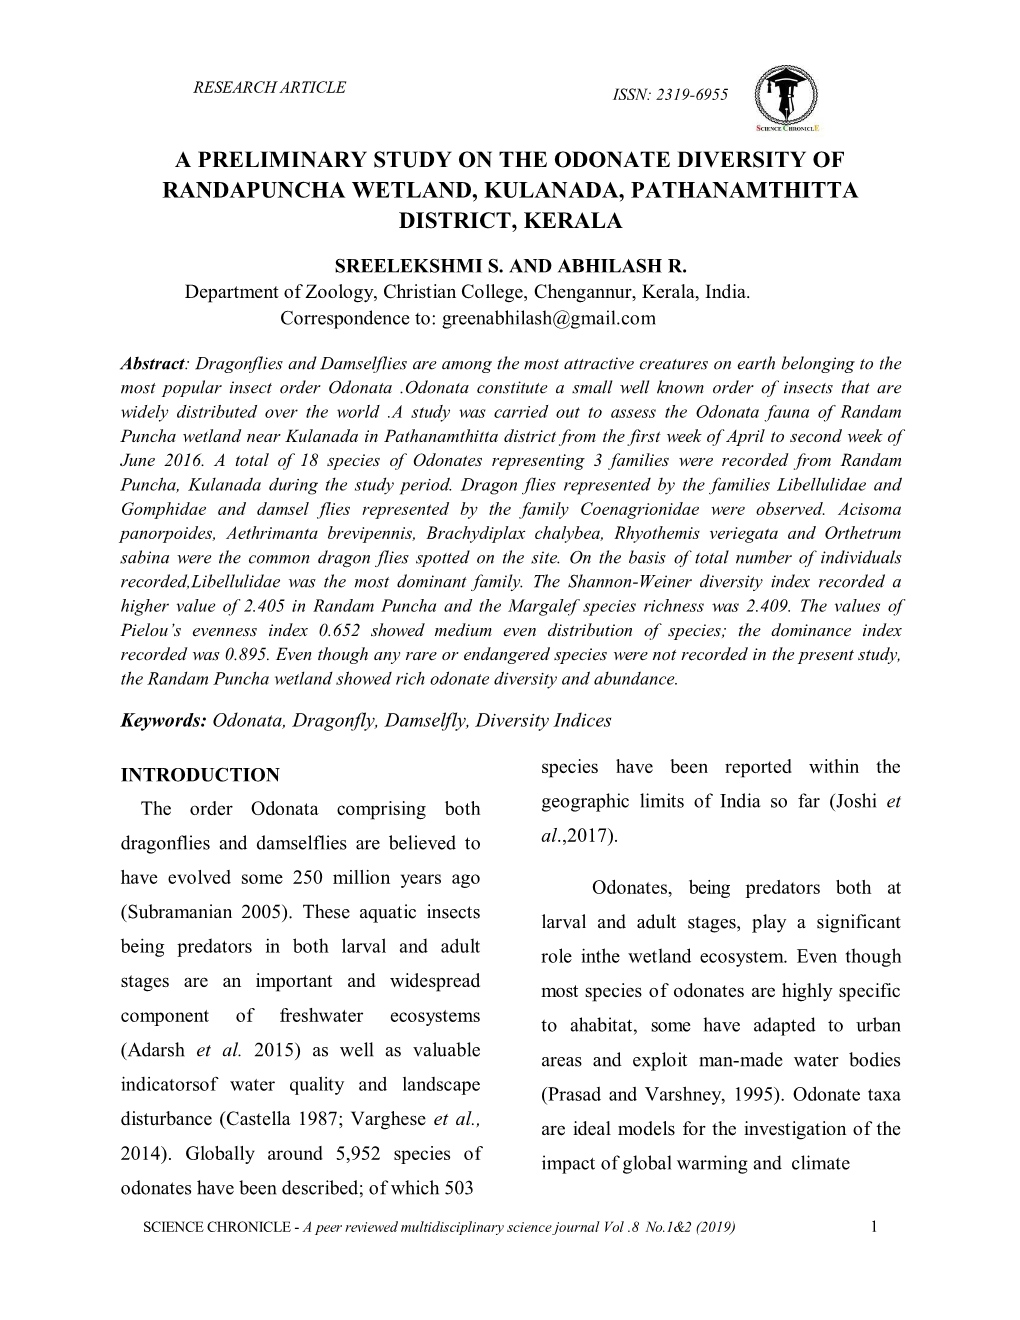 A Preliminary Study on the Odonate Diversity of Randapuncha Wetland, Kulanada, Pathanamthitta District, Kerala